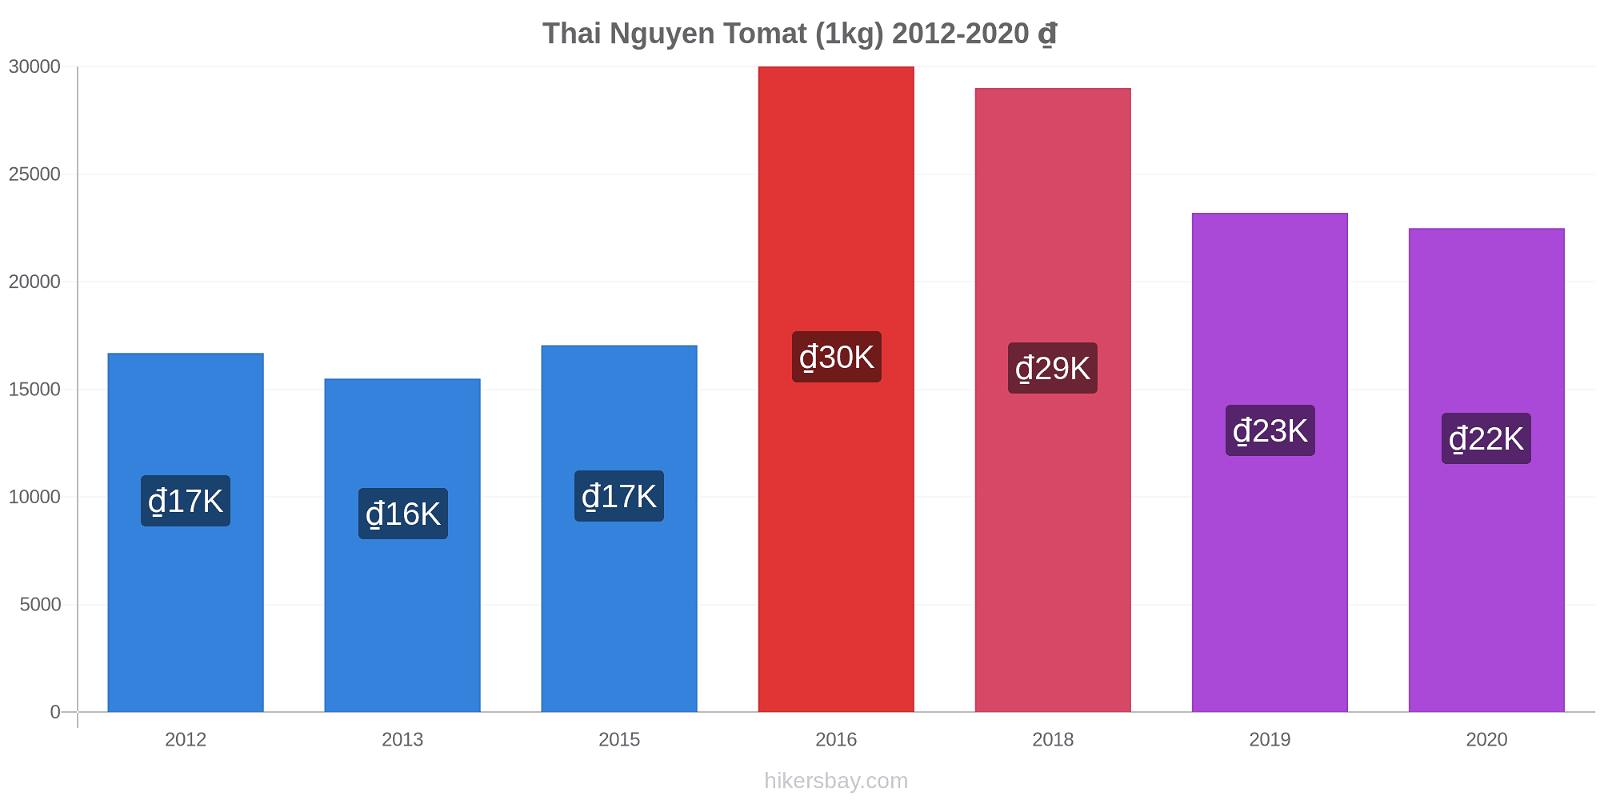 Thai Nguyen prisendringer Tomat (1kg) hikersbay.com